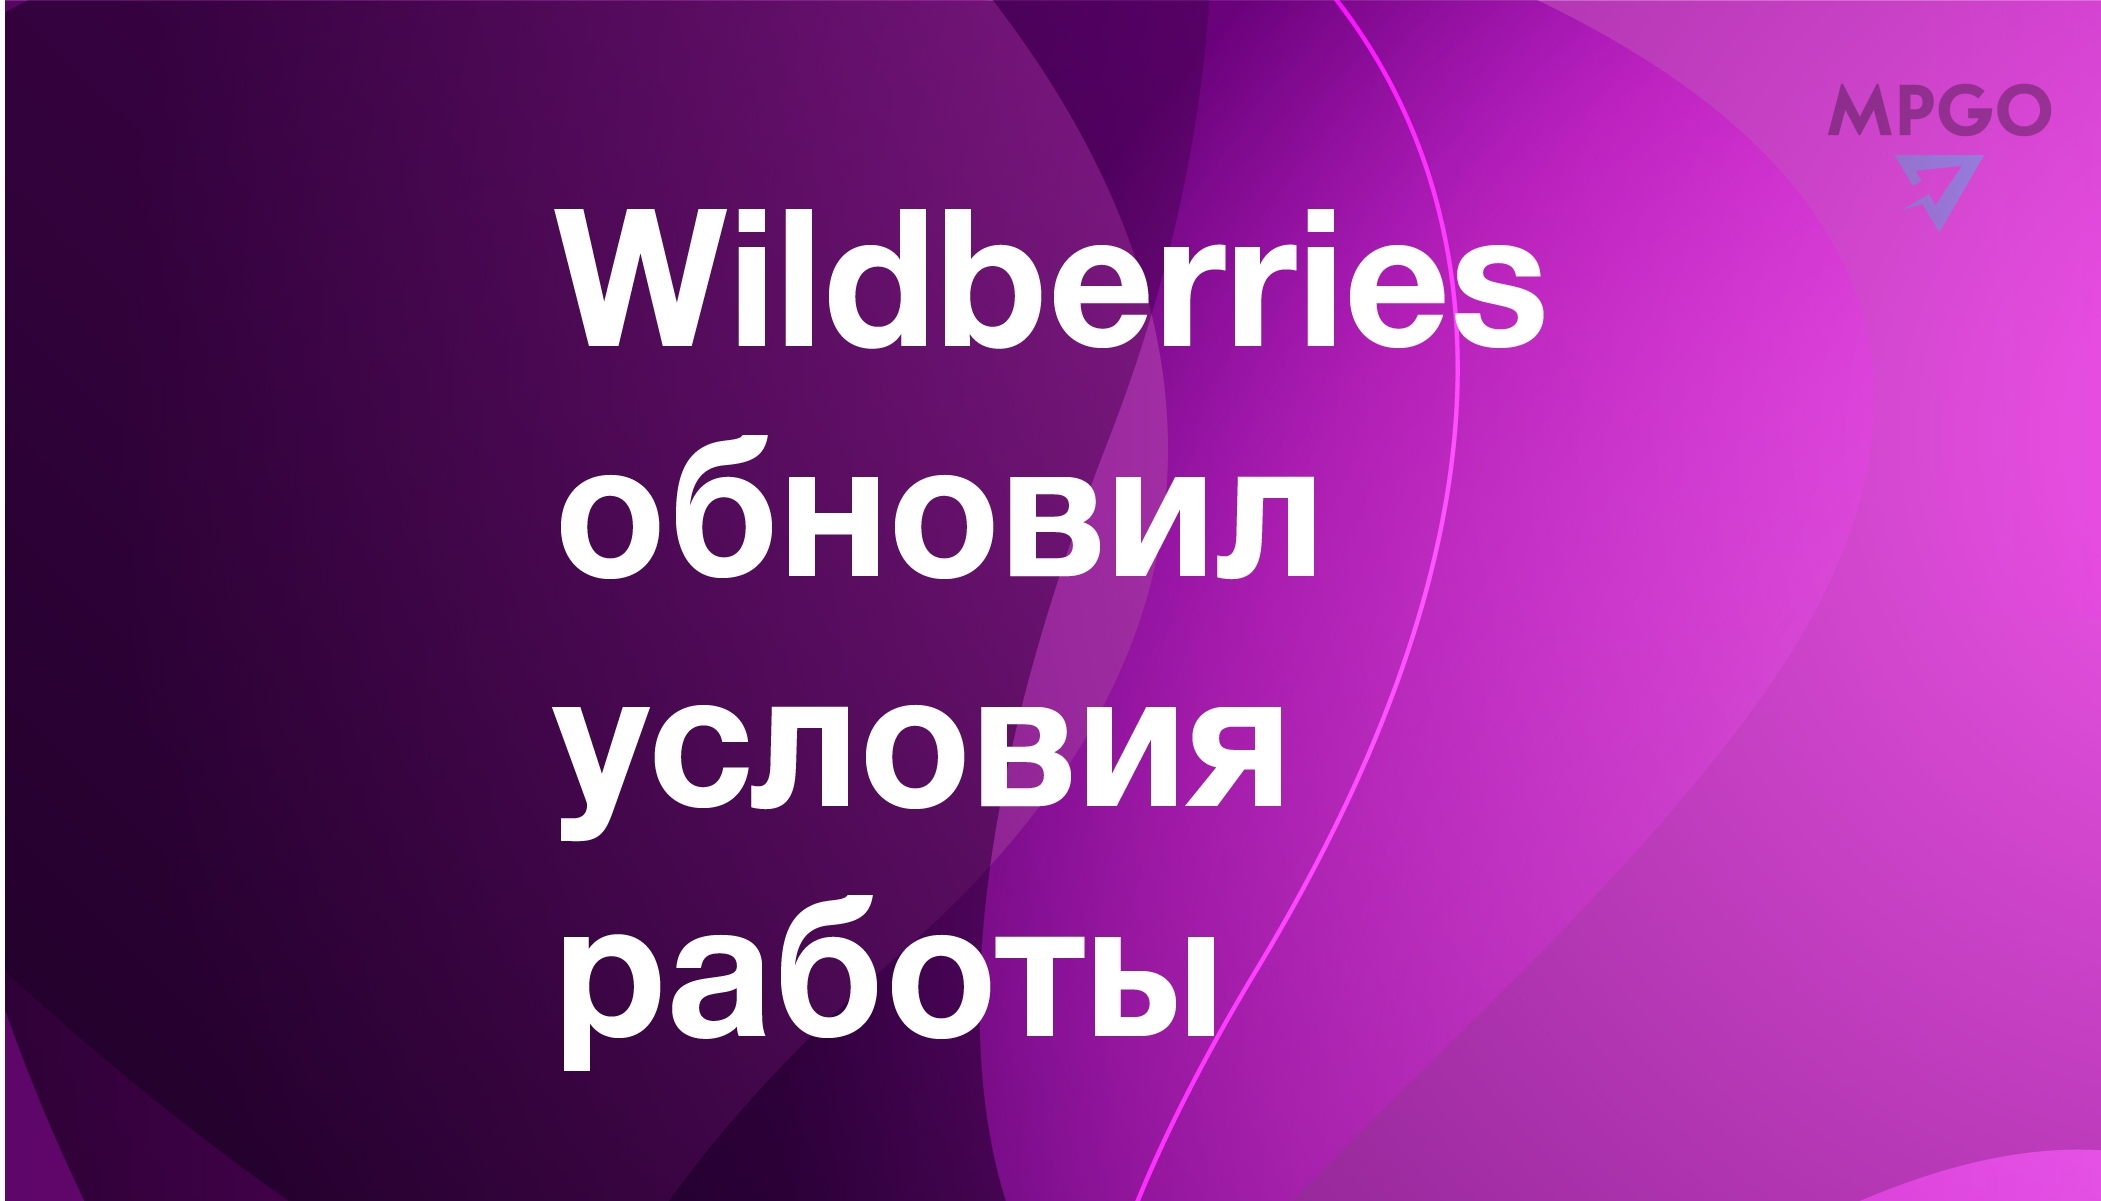 Wildberries обновил условия сотрудничества